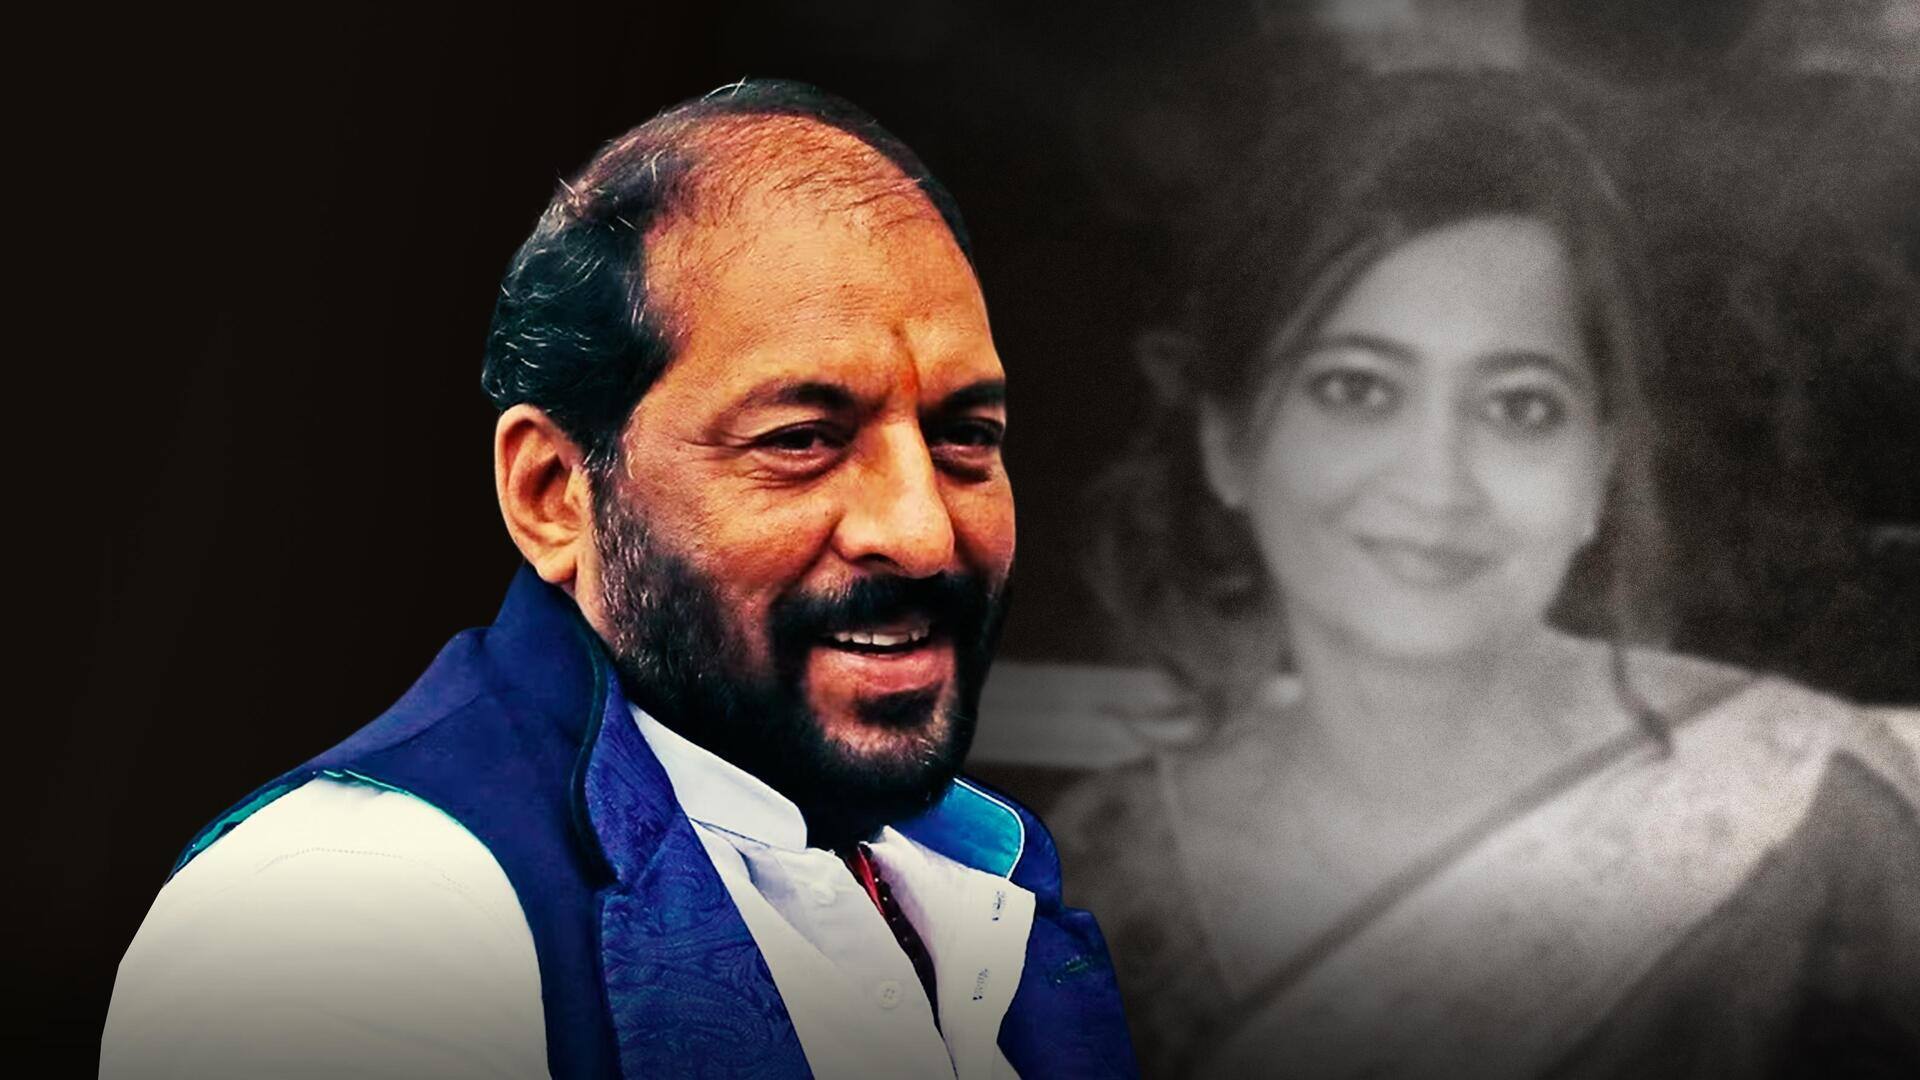 गीतिका शर्मा आत्महत्या मामला: कोर्ट ने हरियाणा के पूर्व मंत्री गोपाल कांडा को बरी किया